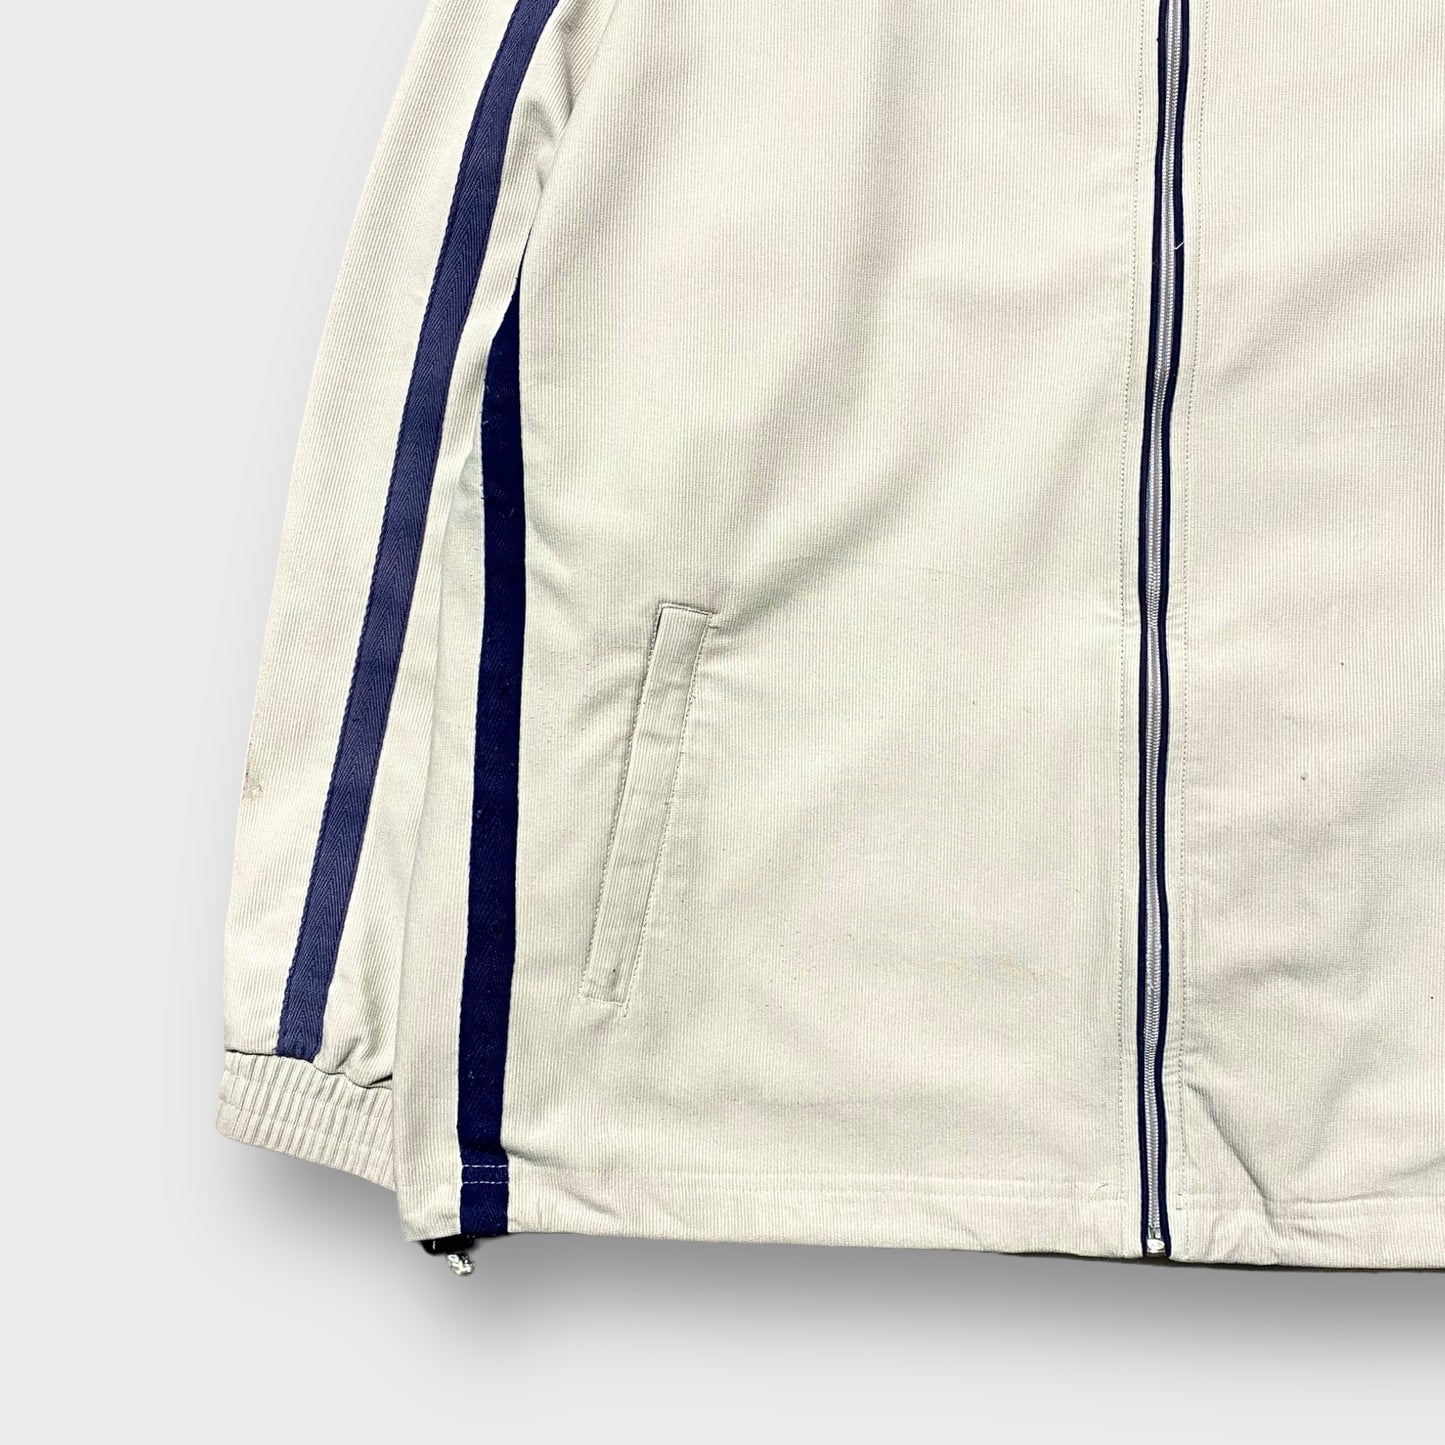 90's "umbro" Nylon jacket